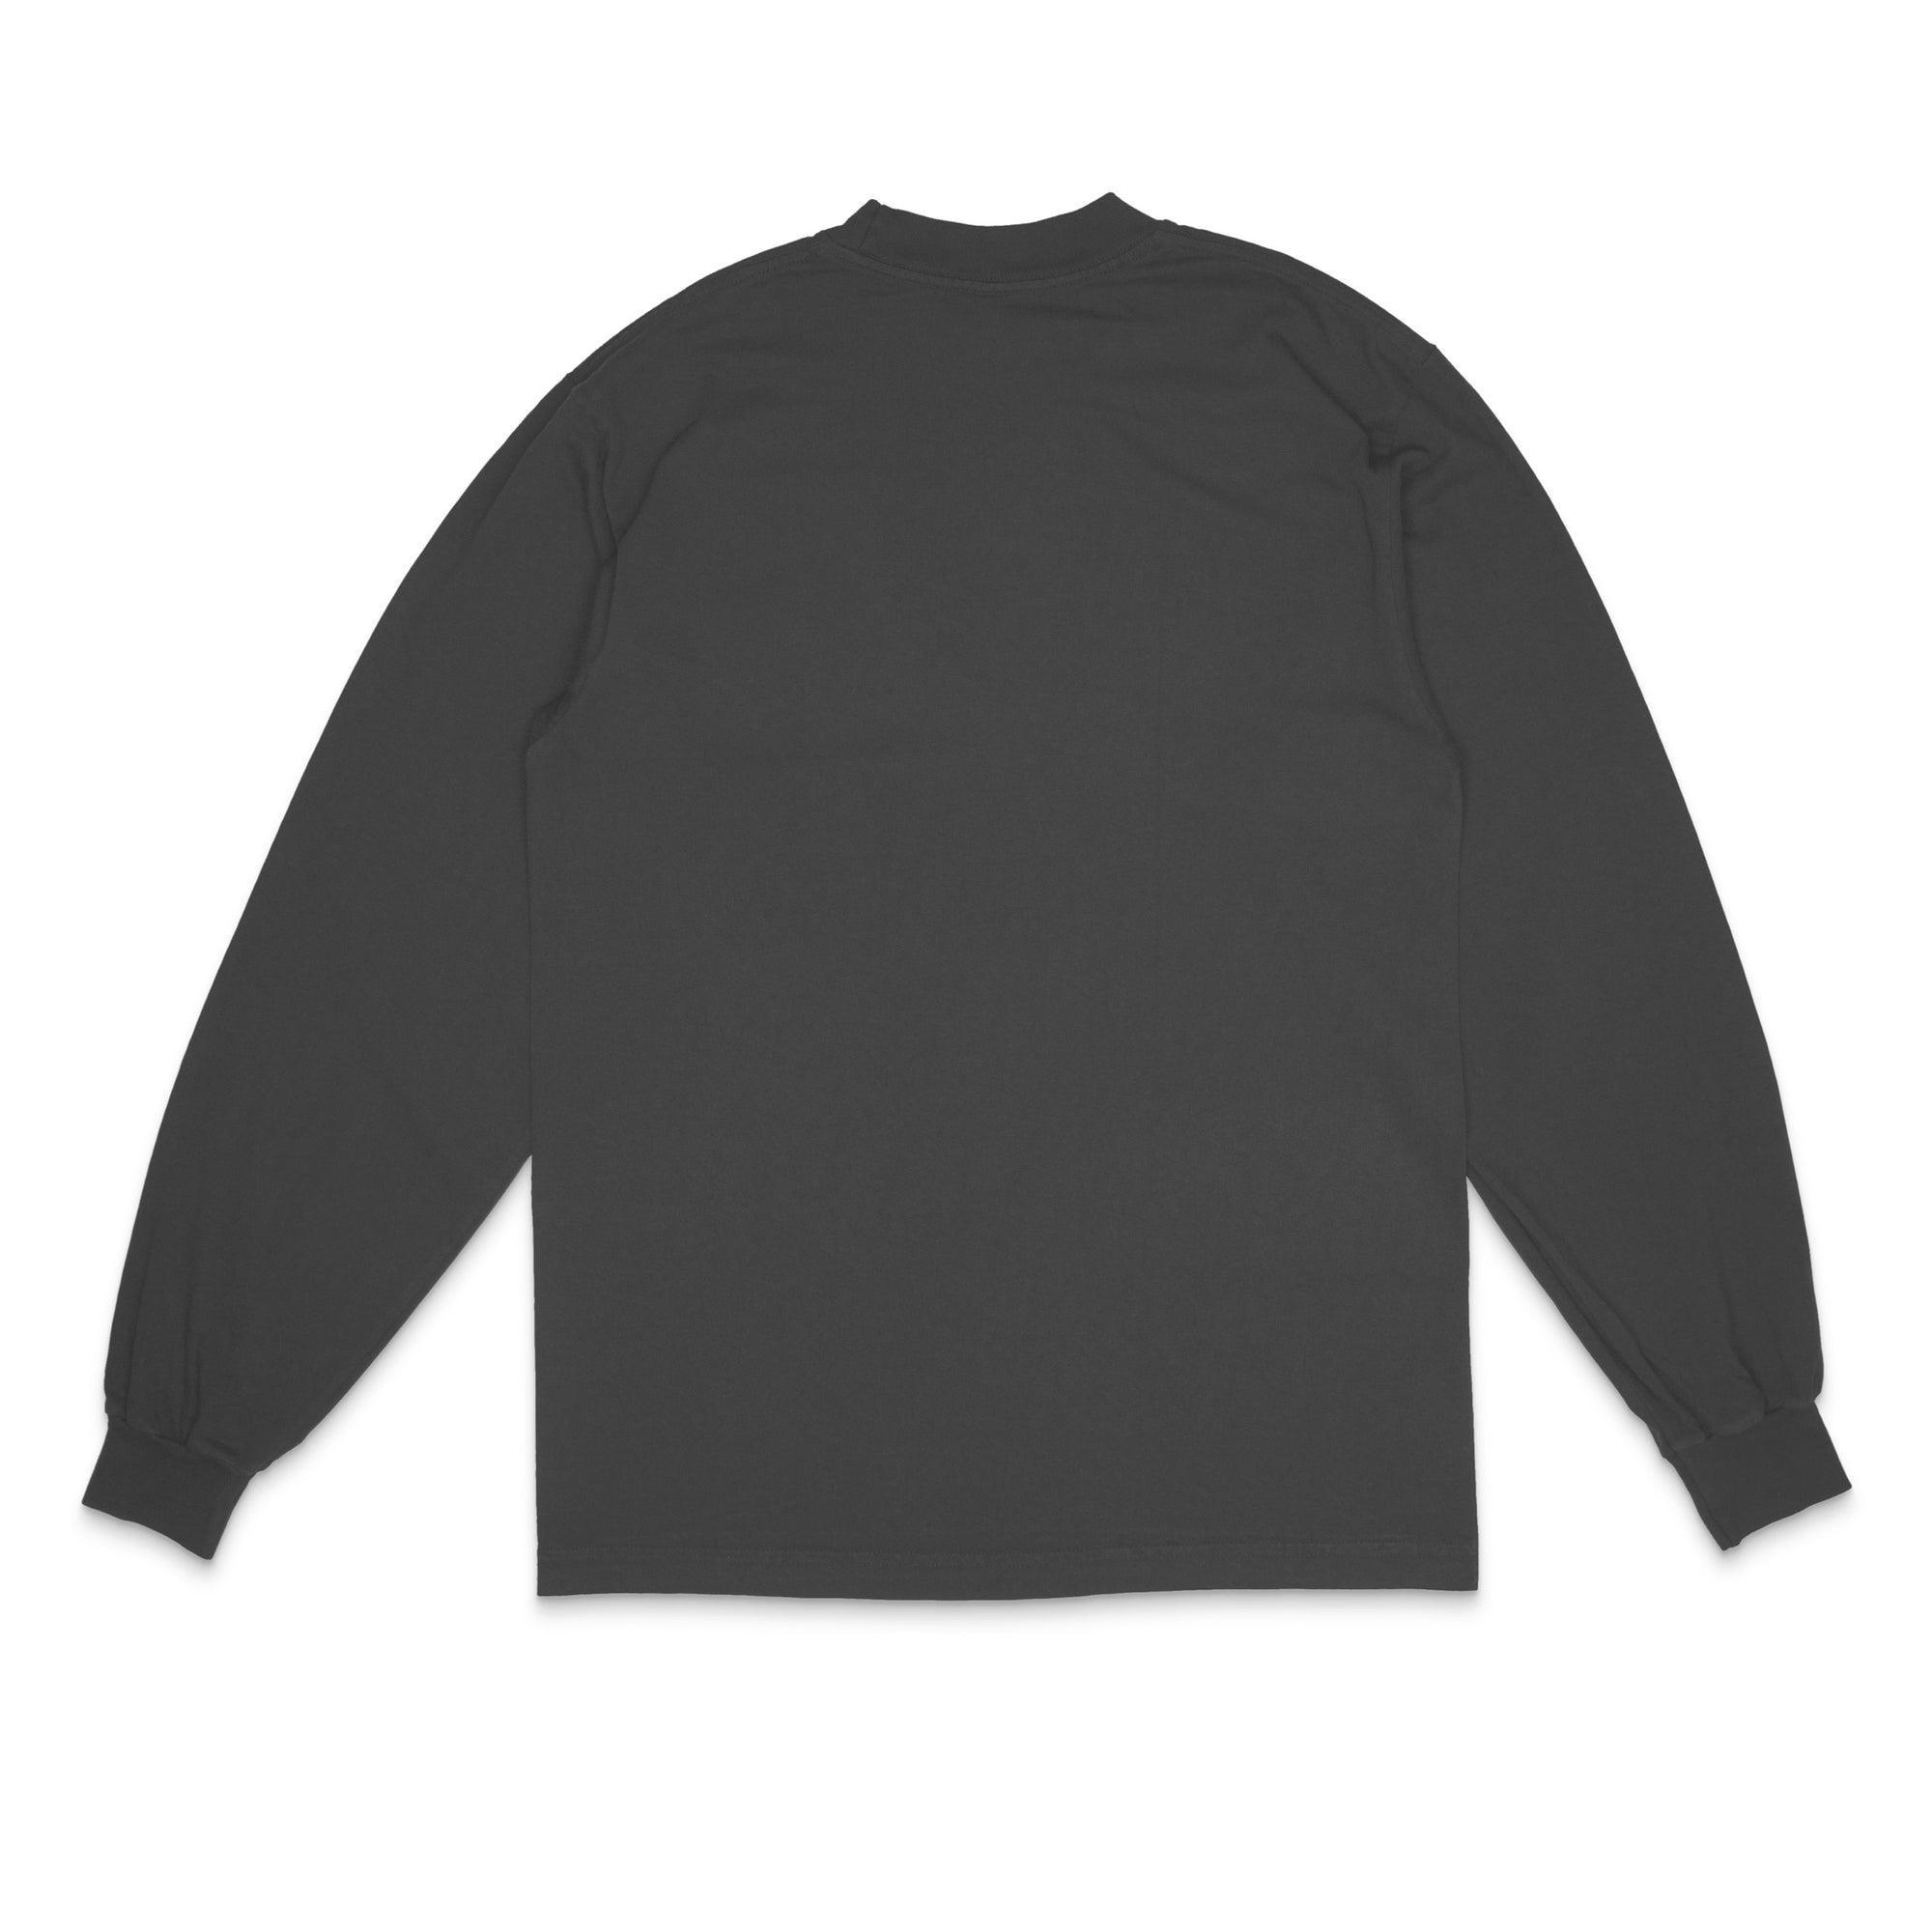 Total Luxury Spa - Men's Faceless Techno Bollocks T-Shirt - (Black) view 2